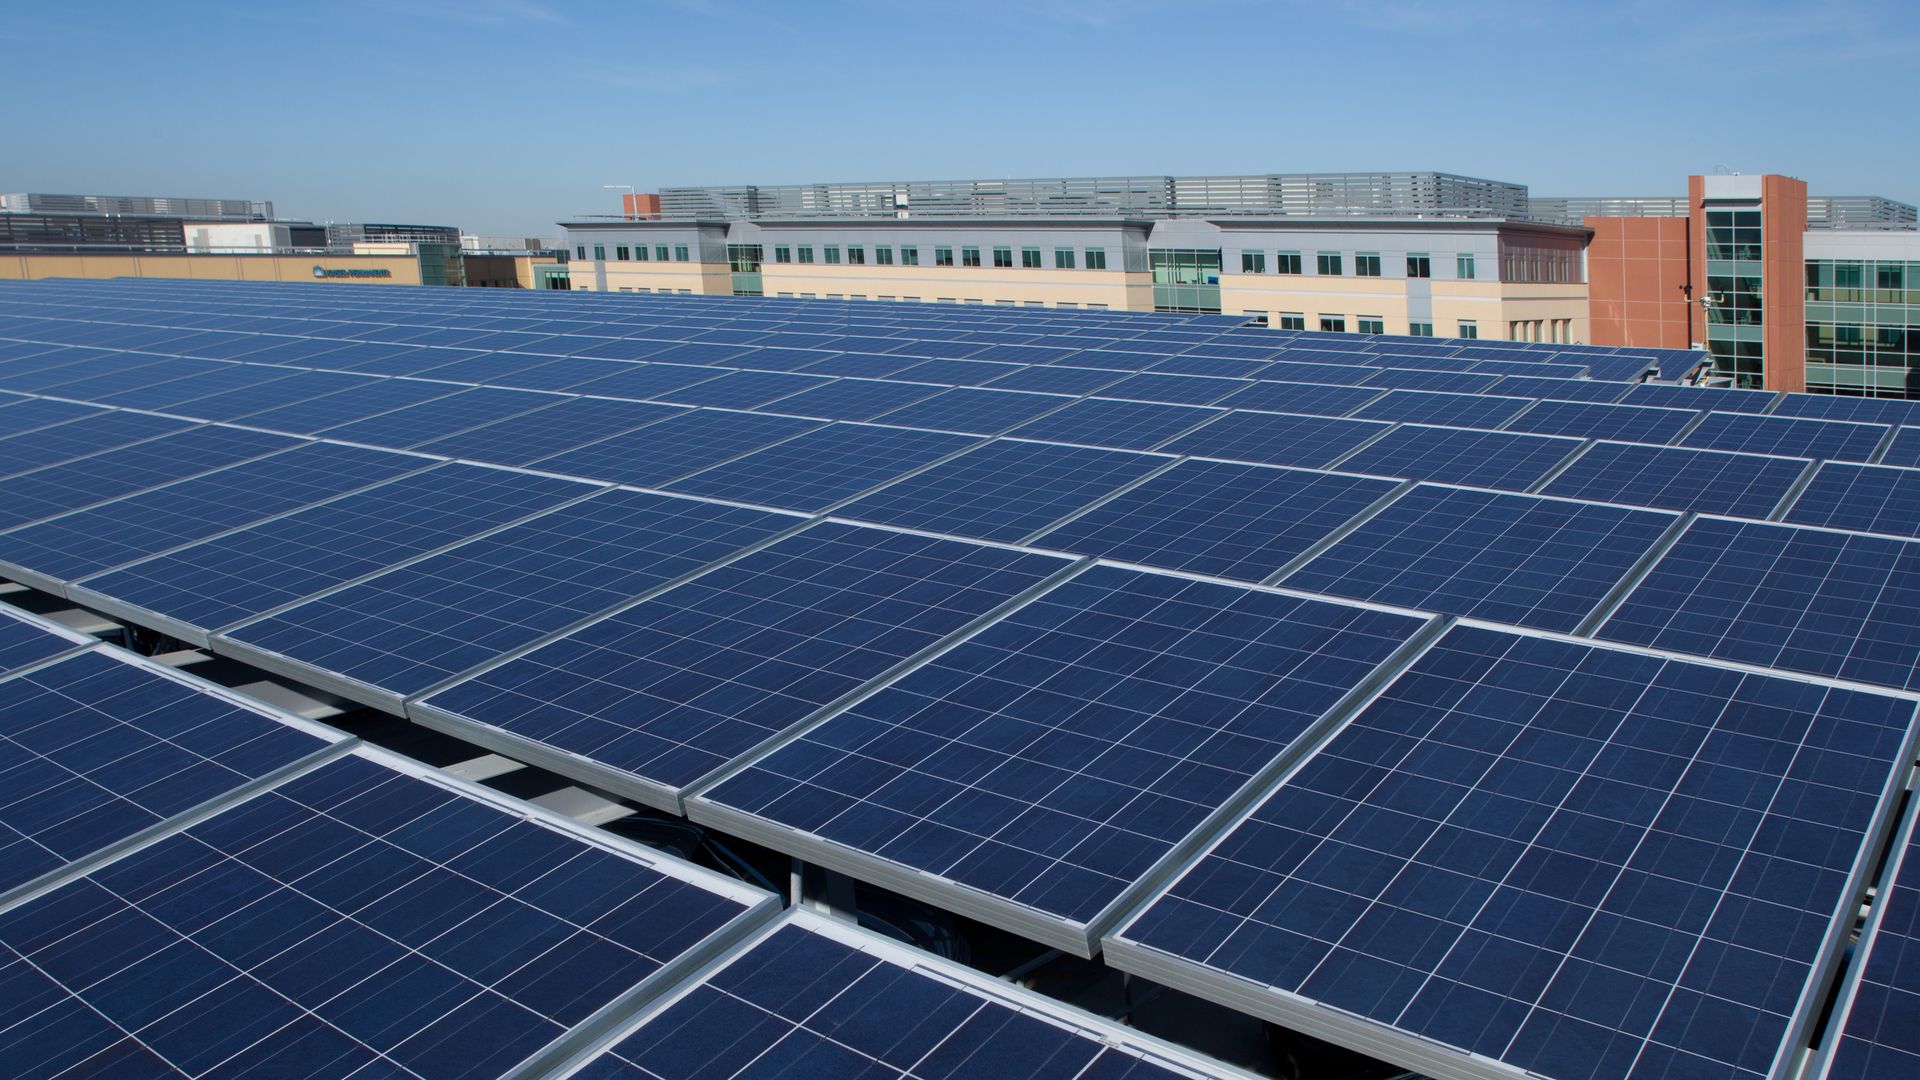 Solar panels at a Kaiser Permanente hospital in California.